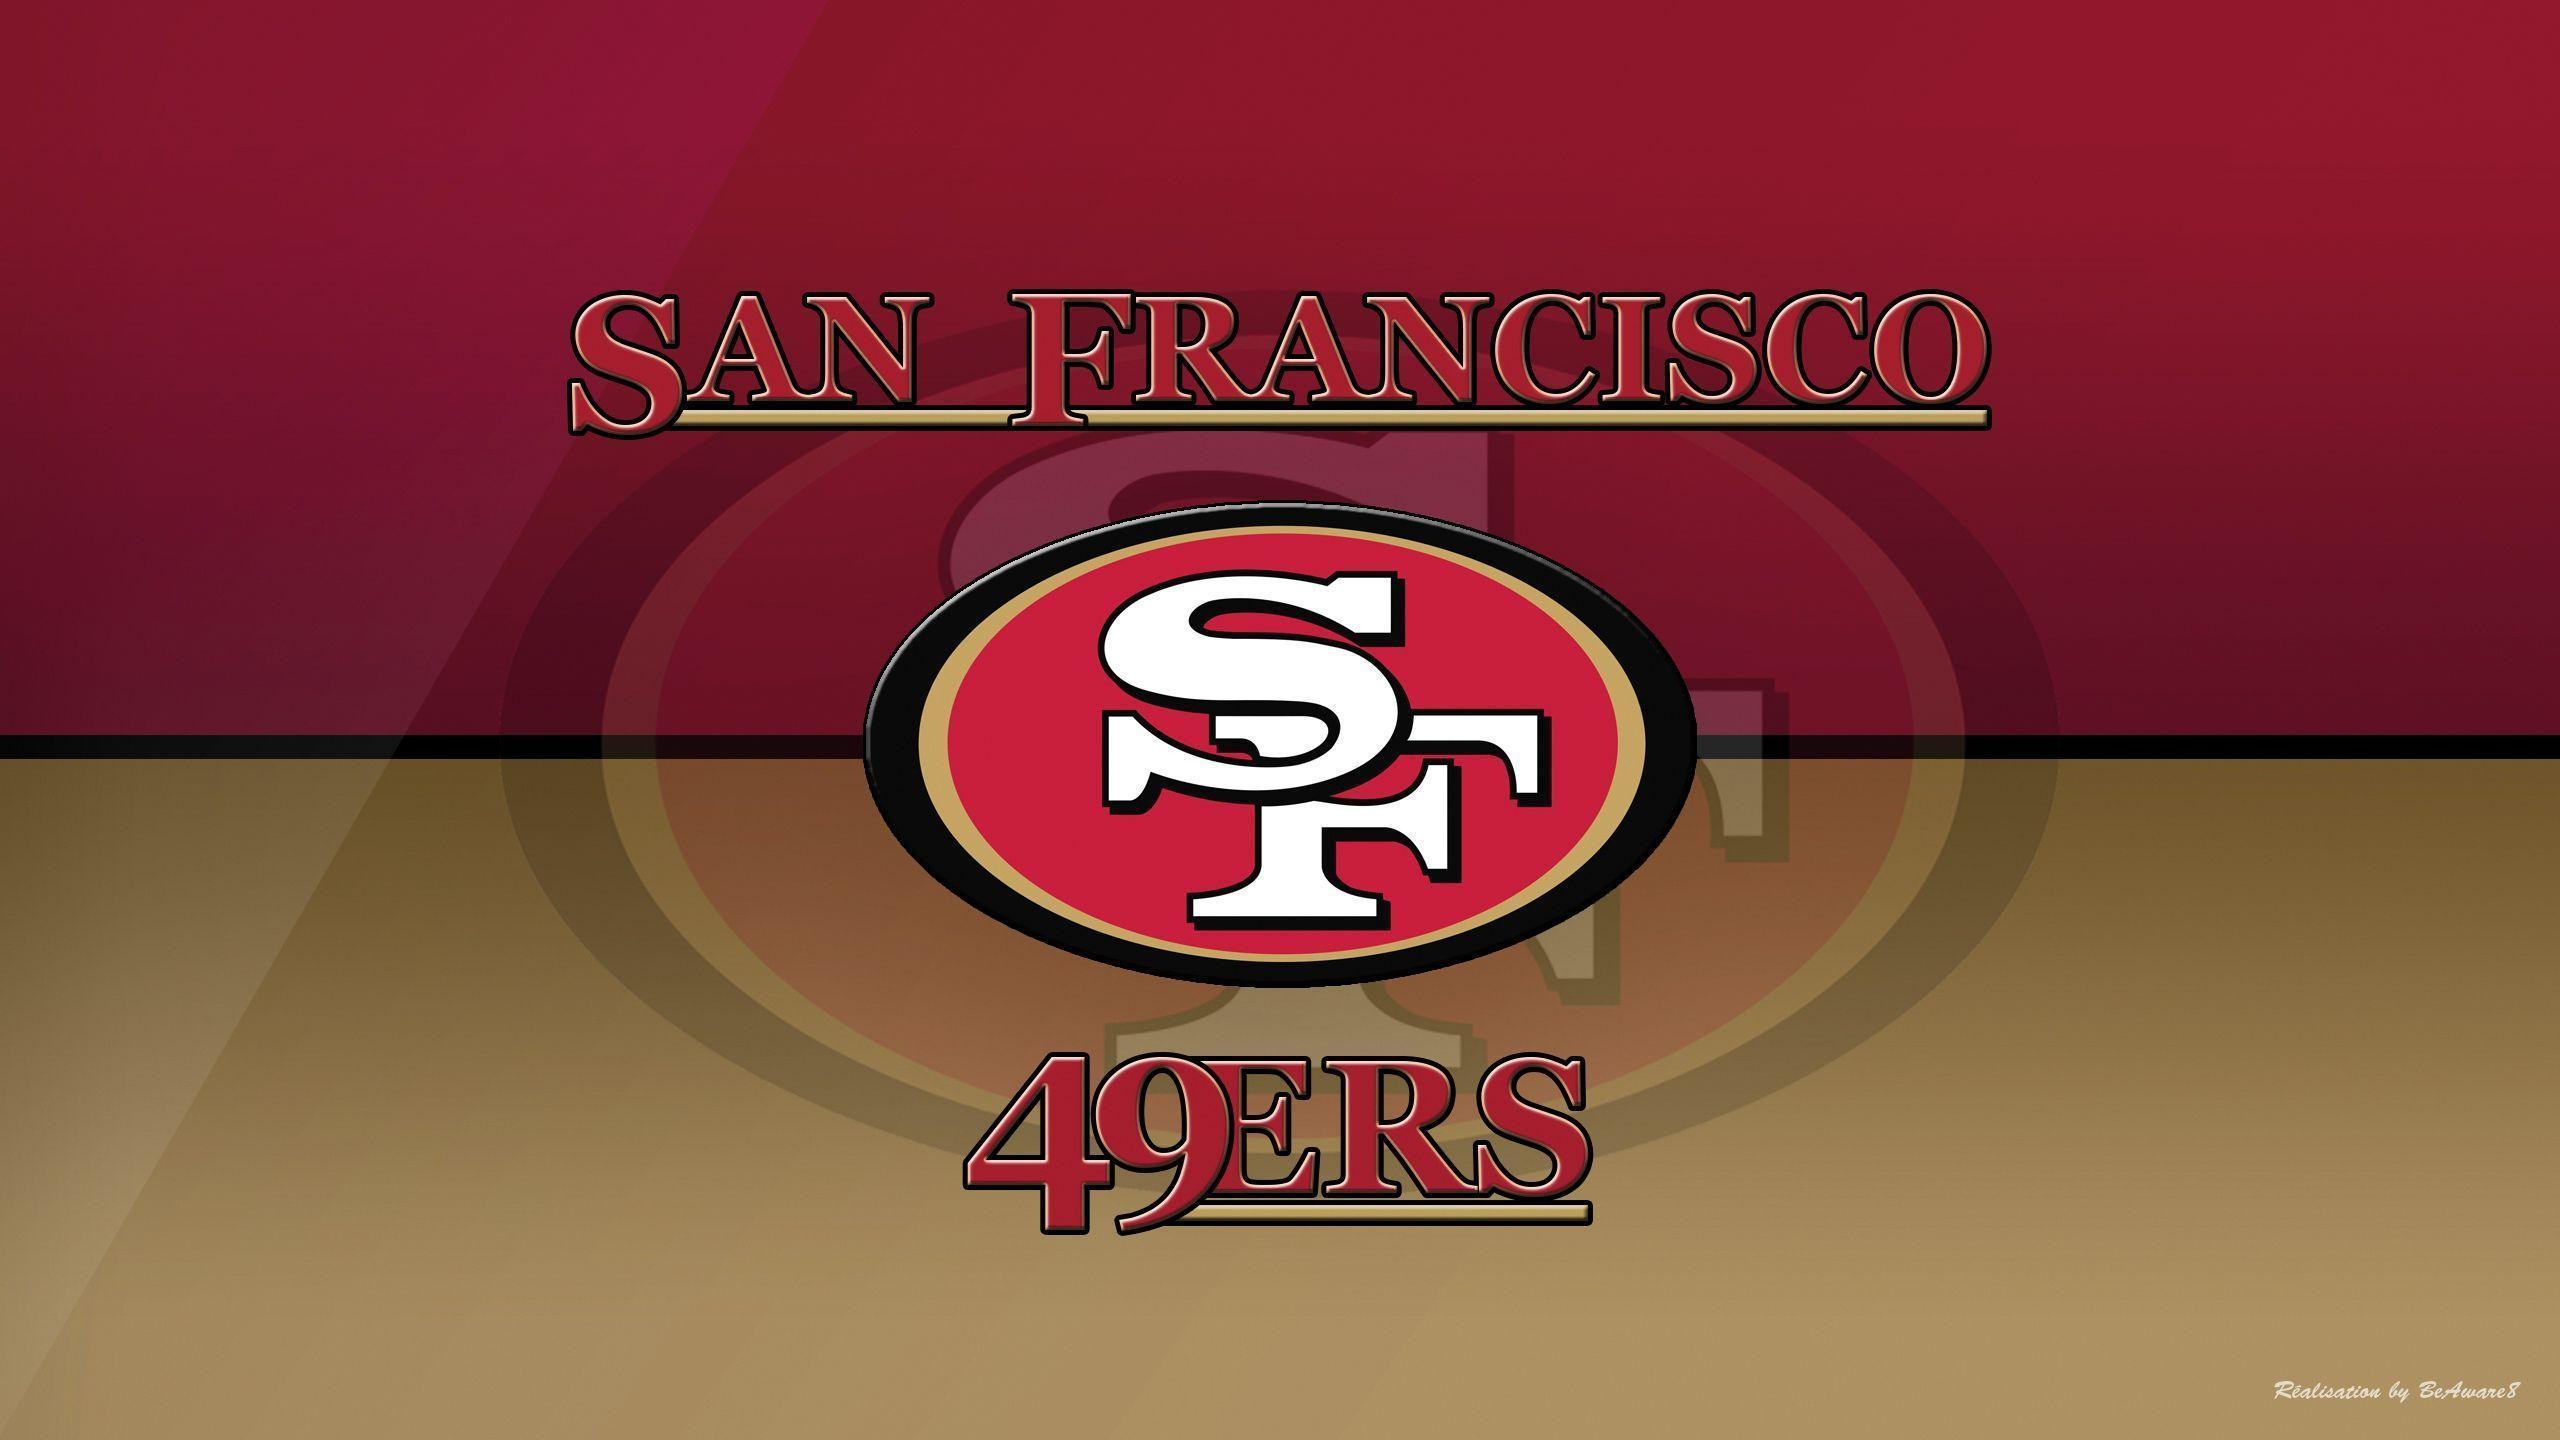 San Francisco 49ers Screensaver Wallpaper Image